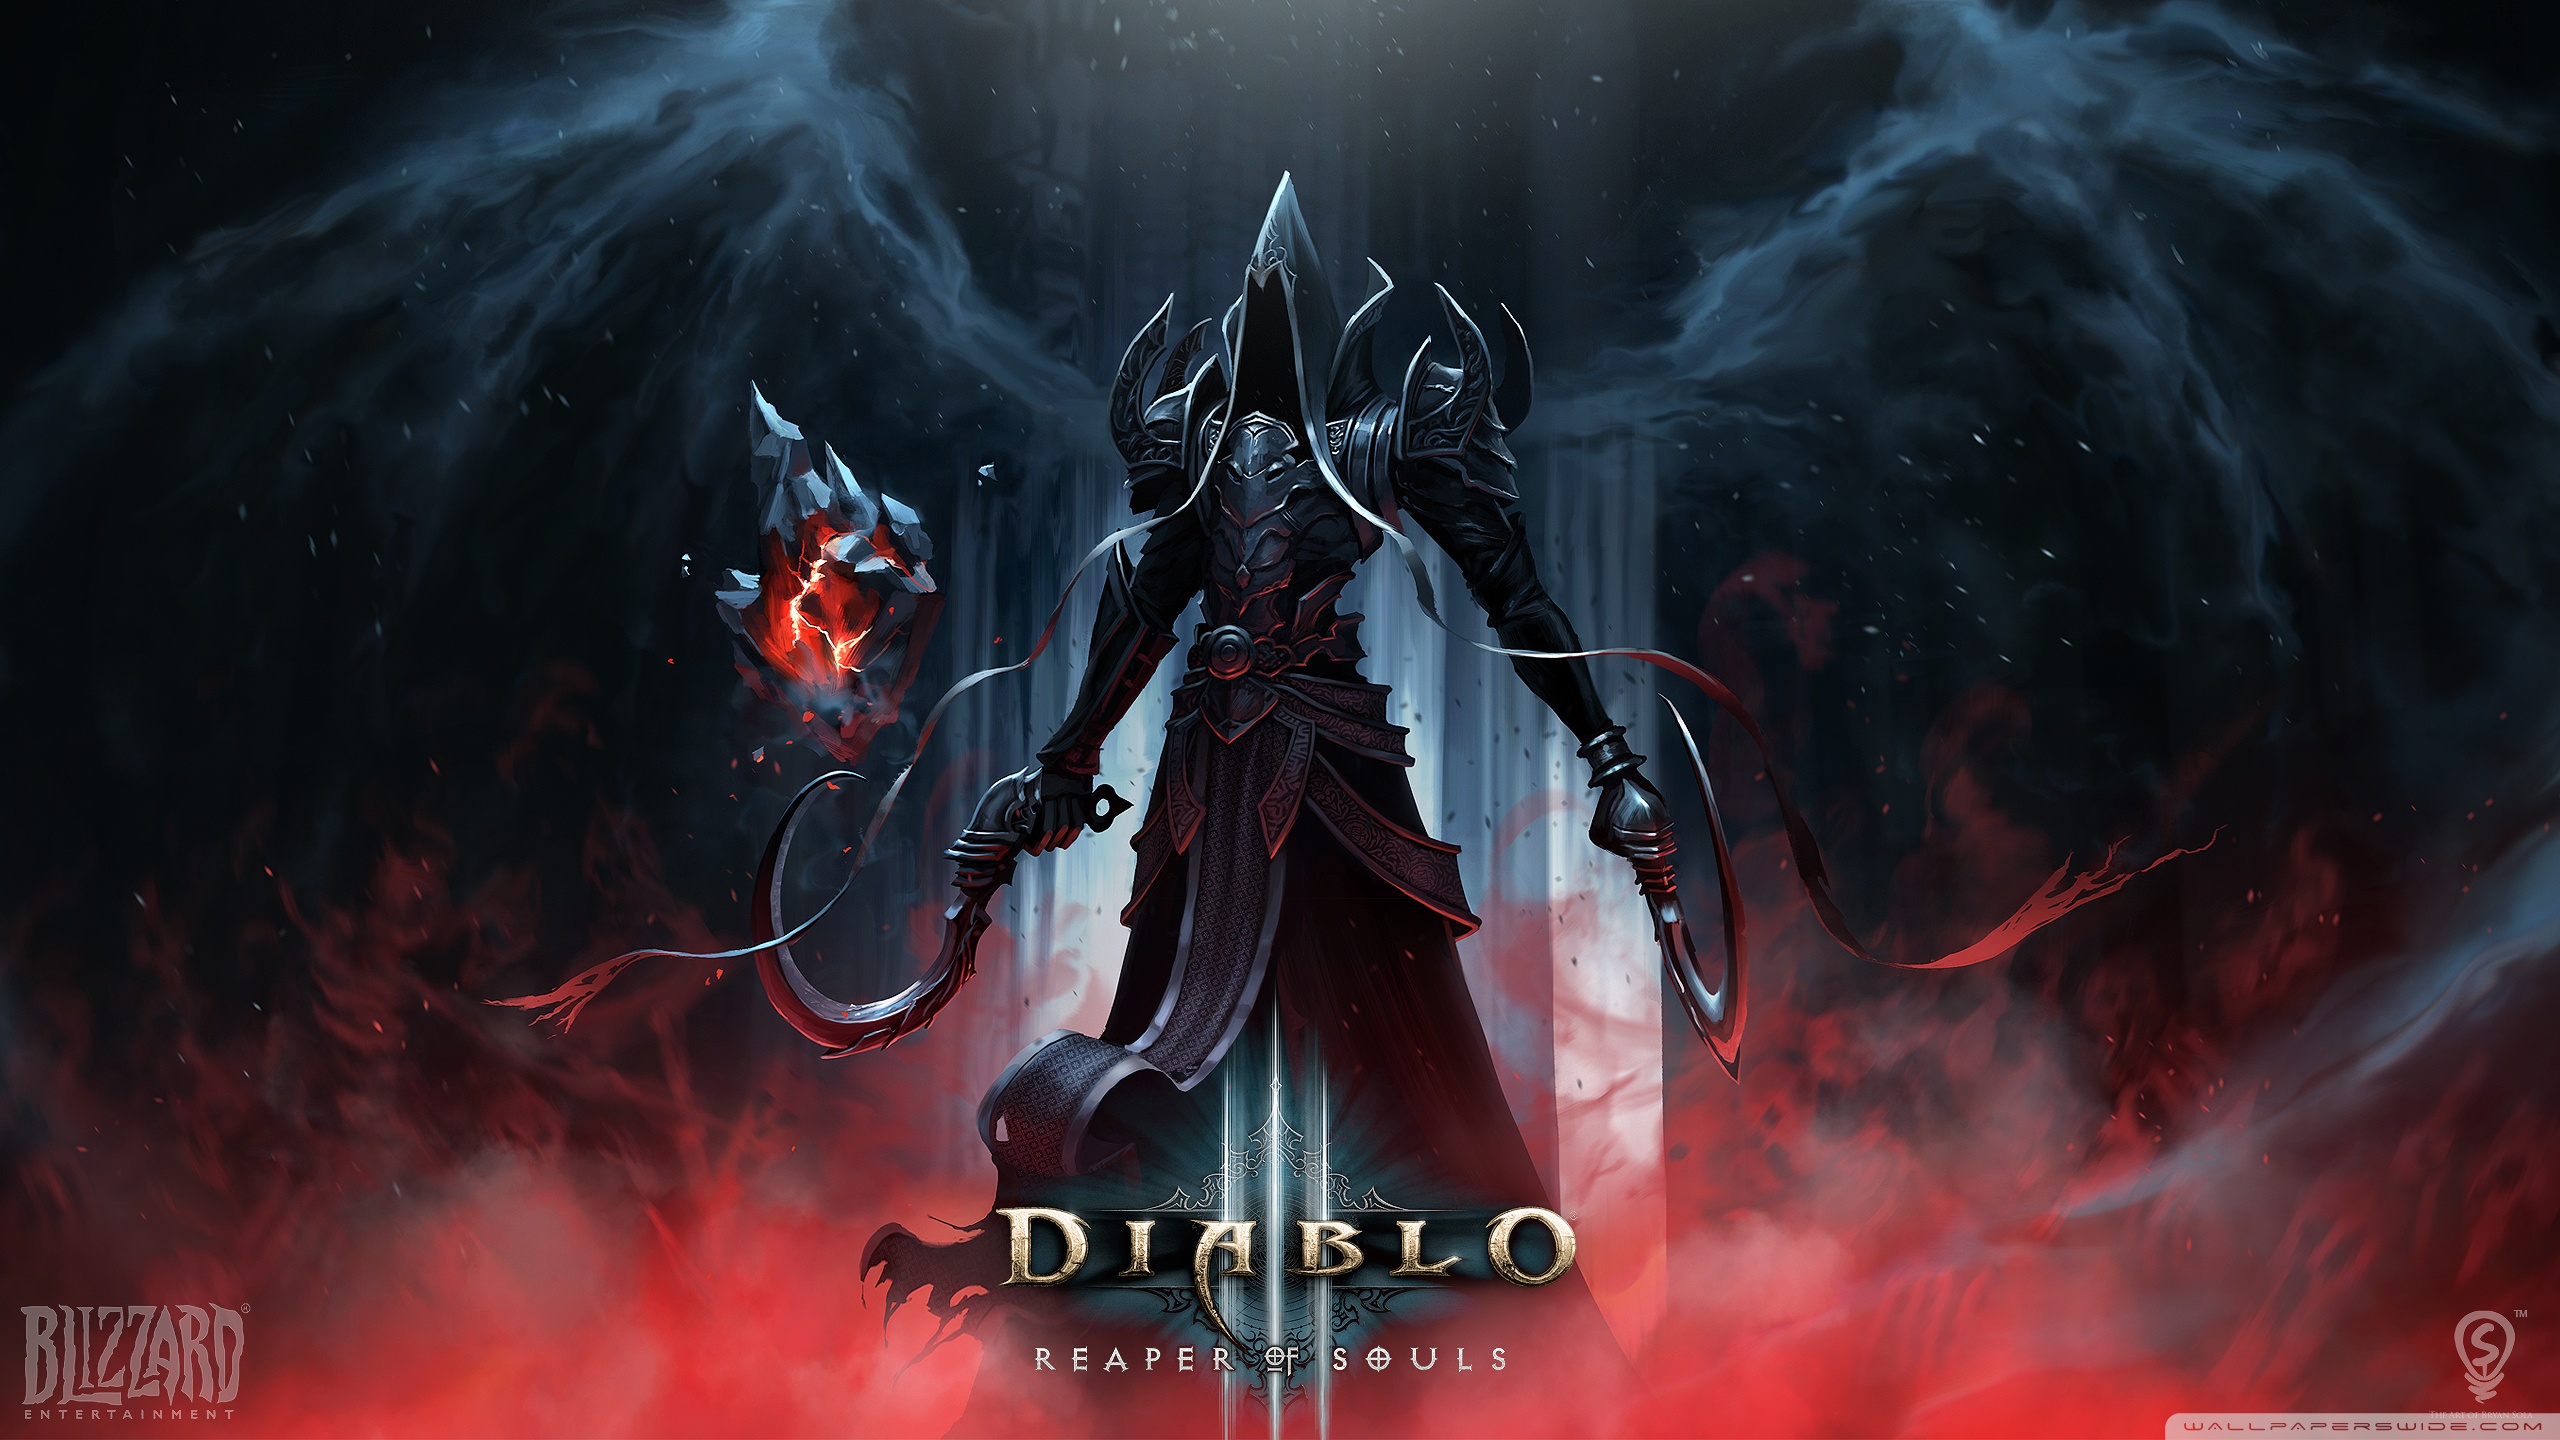 Diablo Iii HD Wallpaper And Background Image